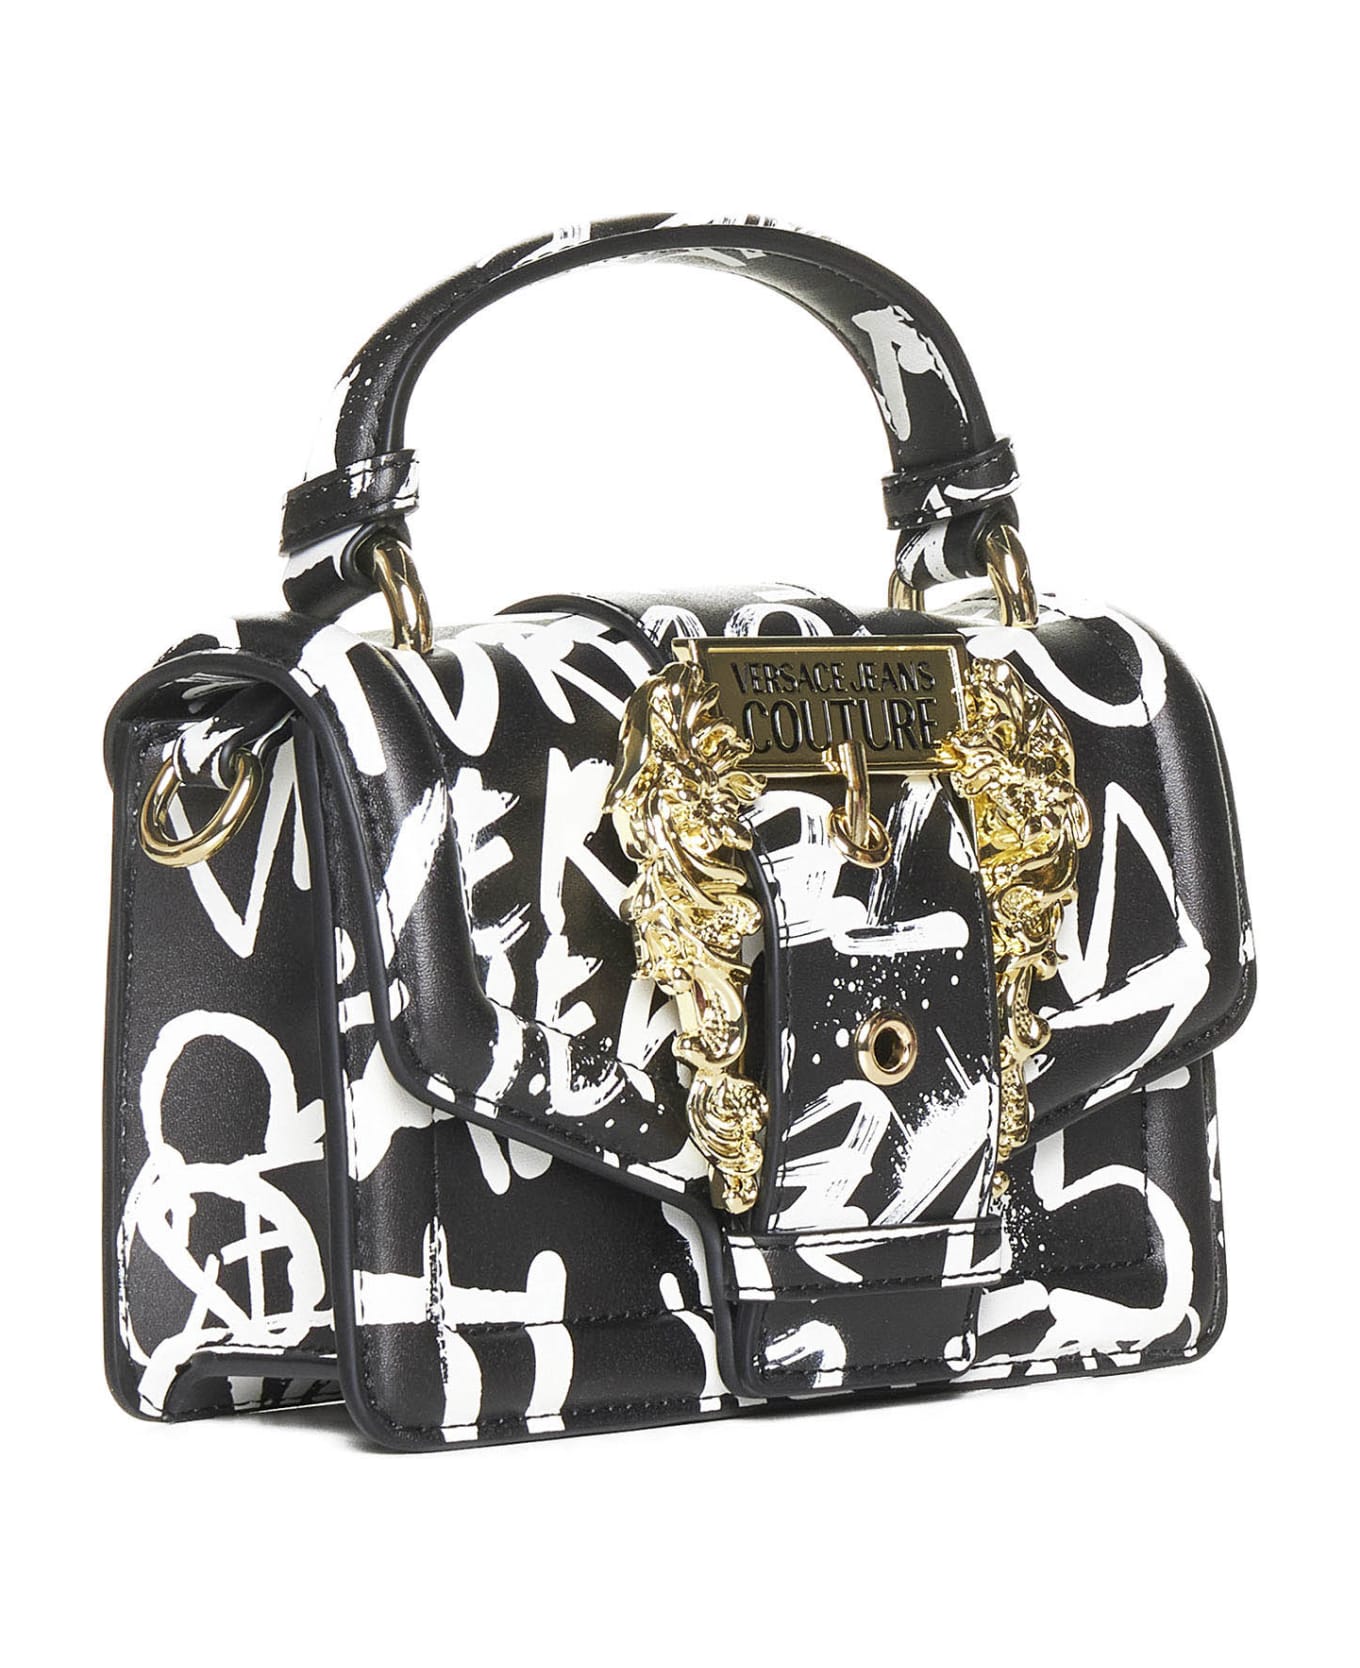 Versace Jeans Couture Logo Graffiti Handbag - Black white